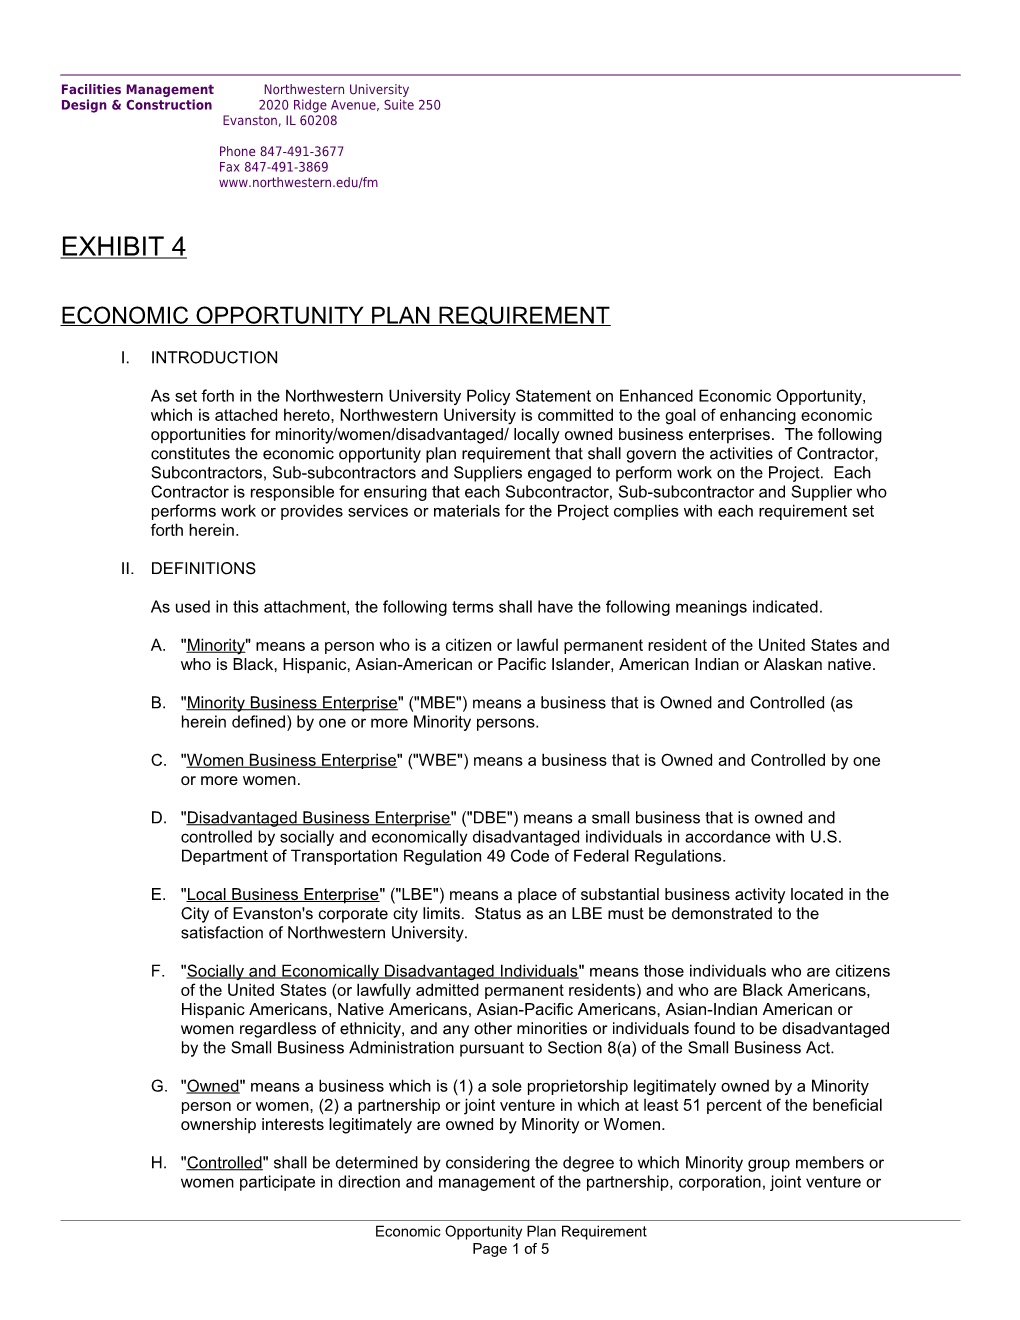 Economic Opportunity Plan Requirement